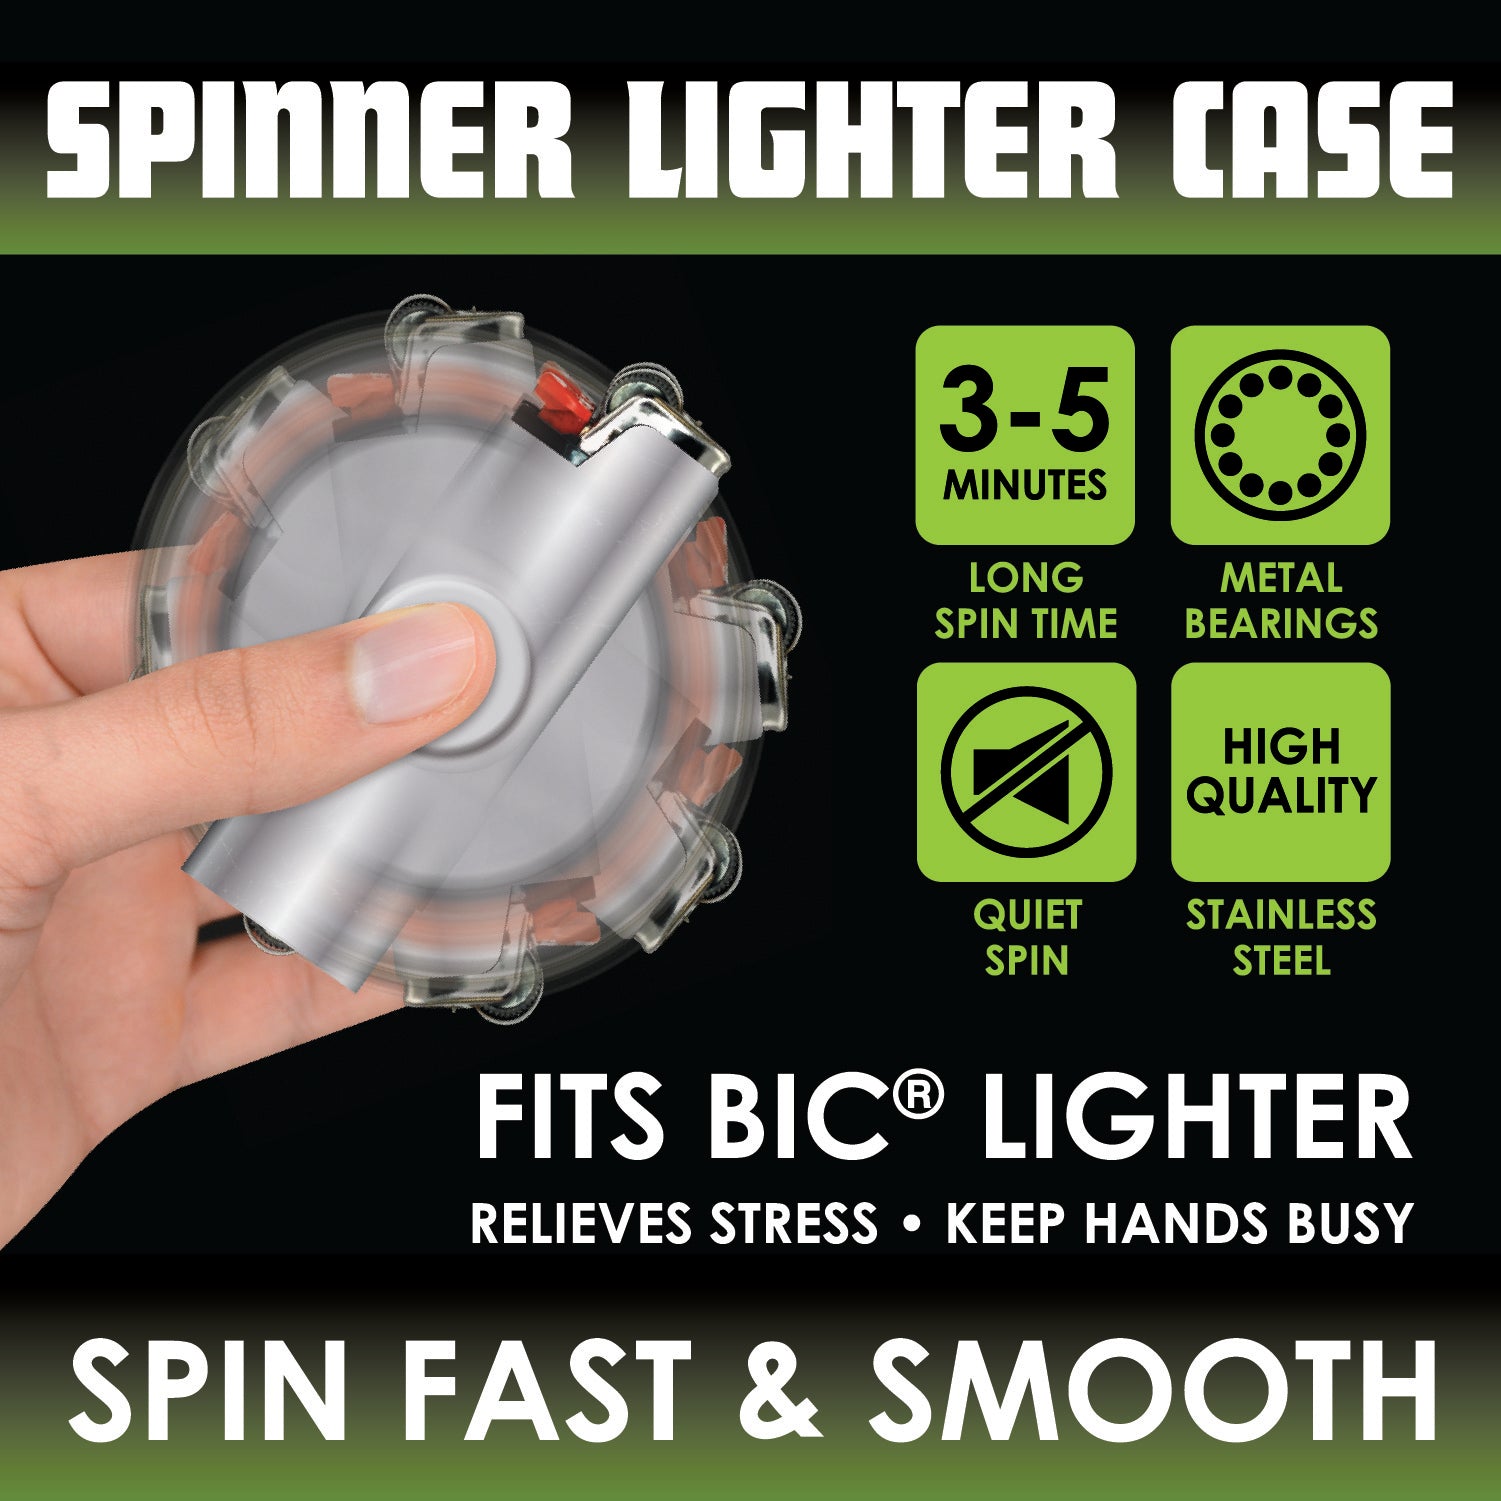 Lighter cases – Designed By Ryan